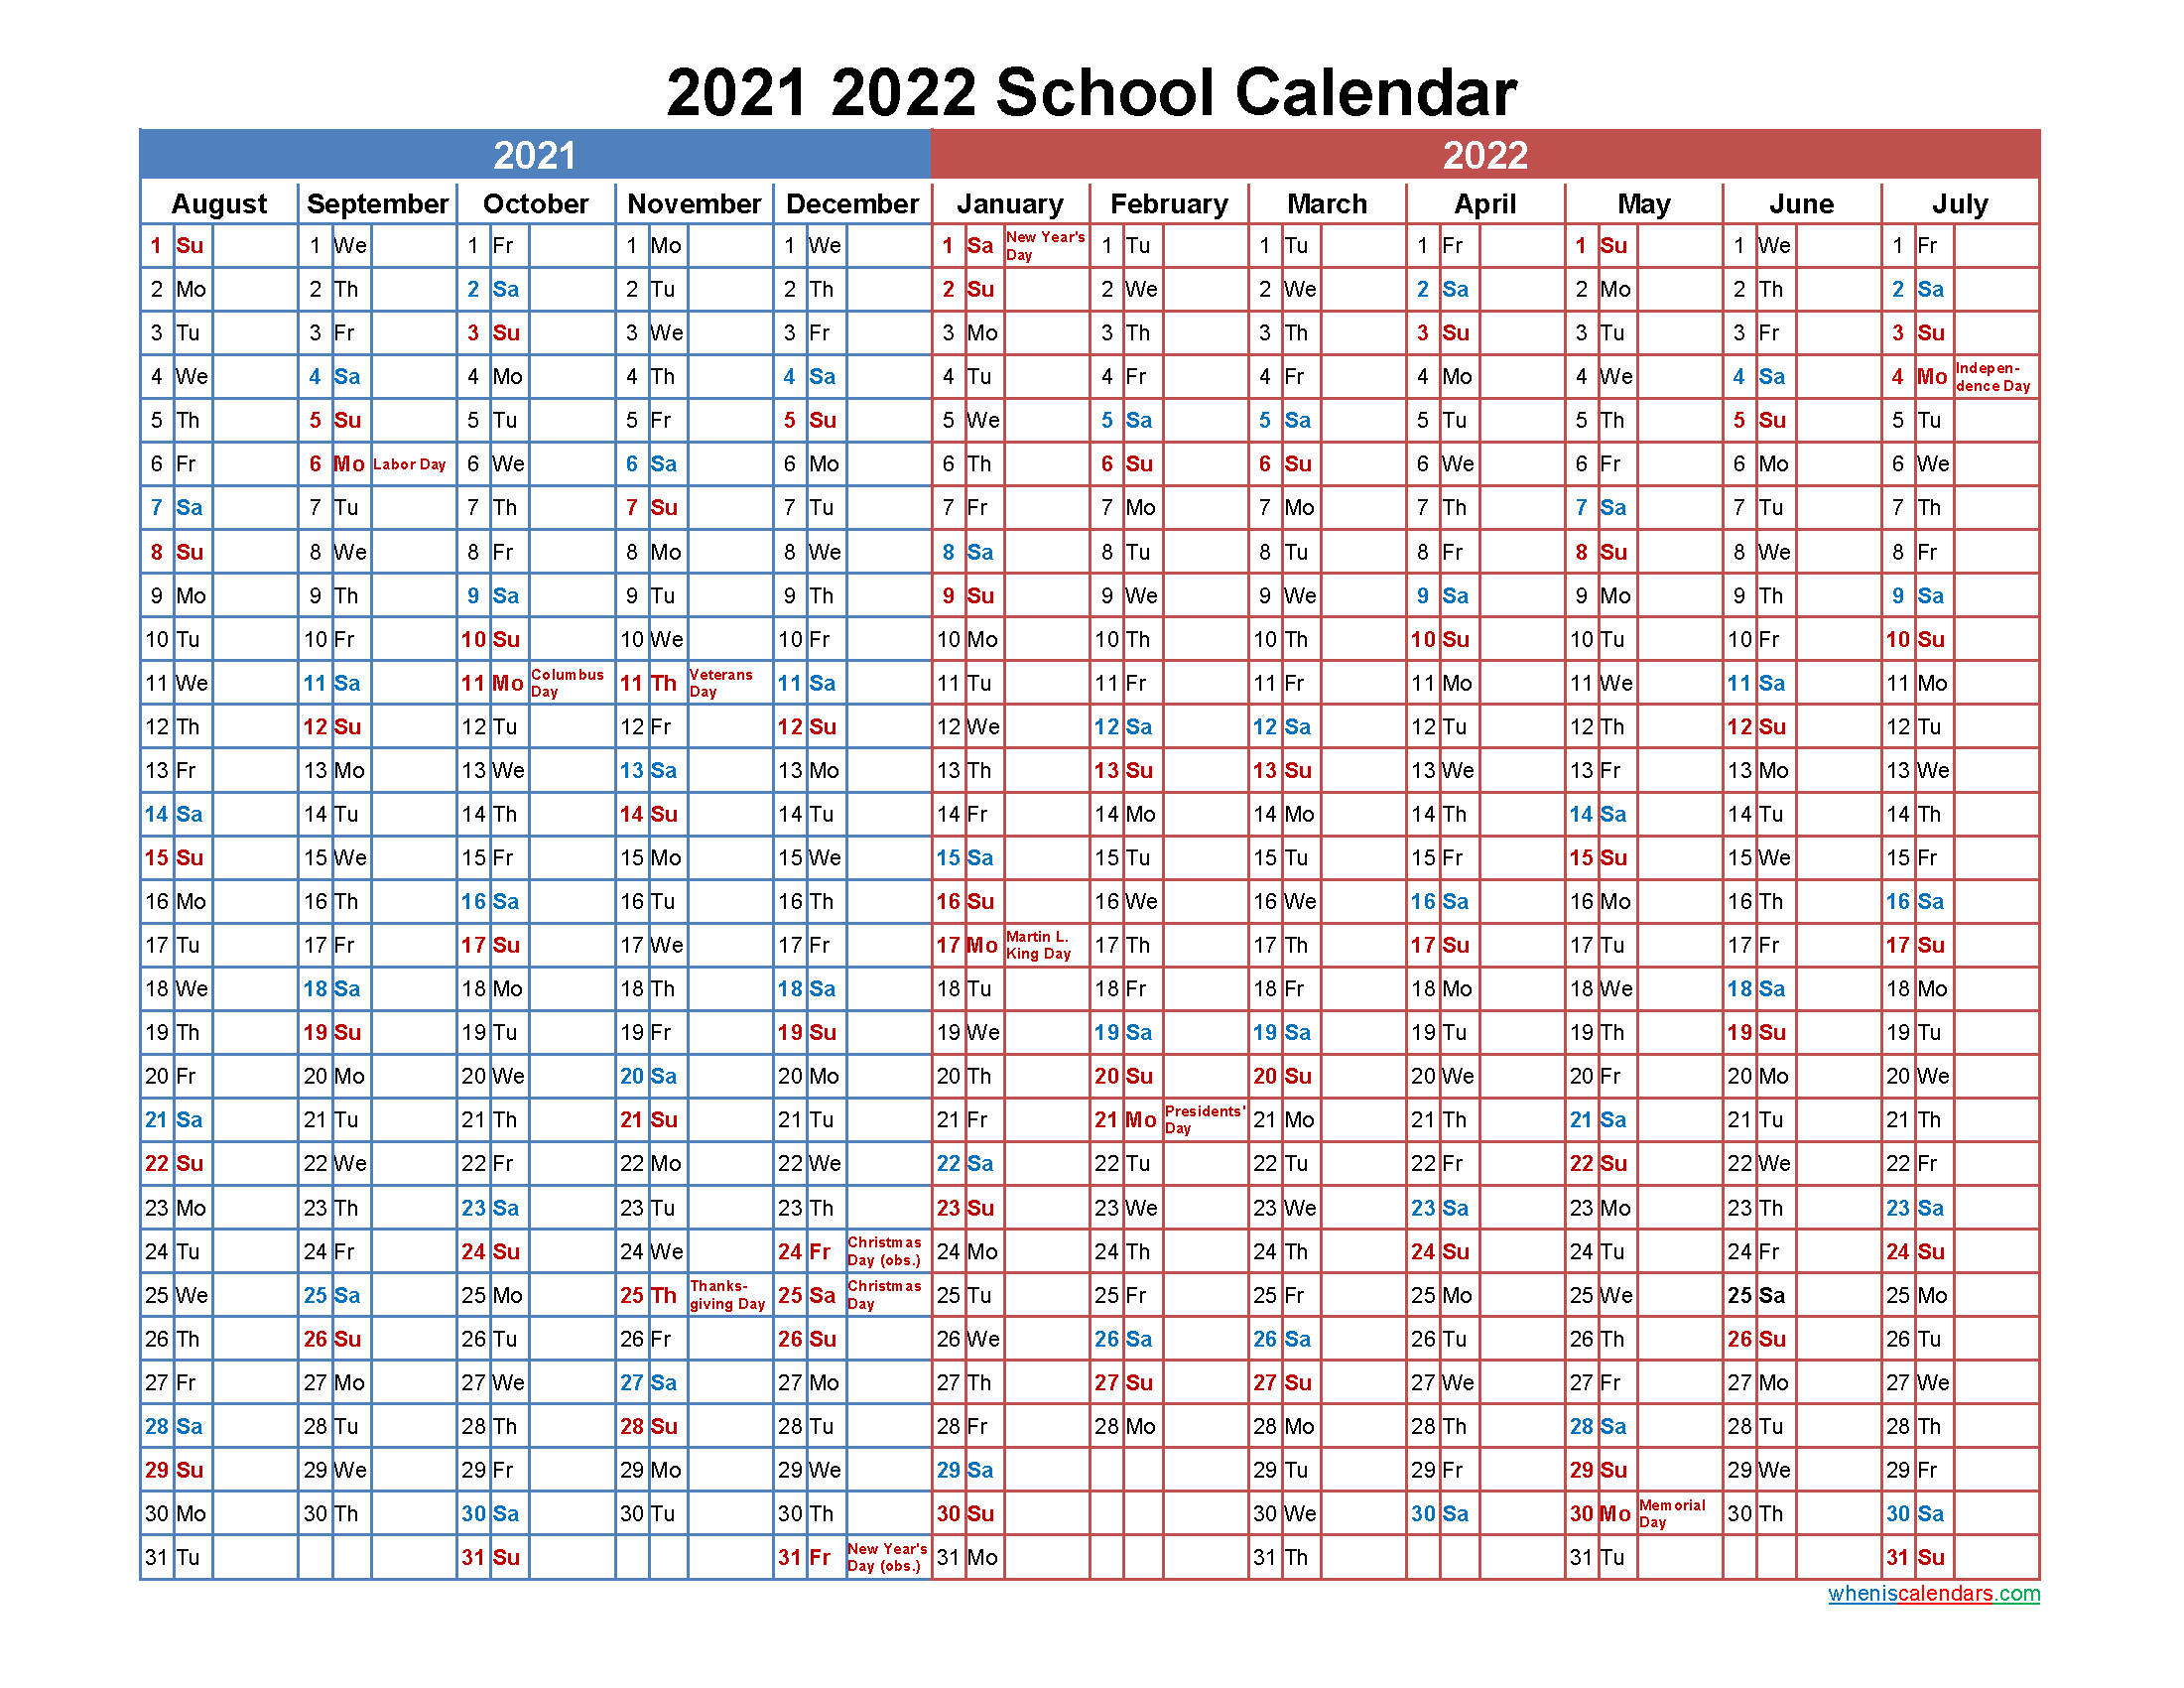 2021 and 2022 School Calendar Printable - Template No.22scl1